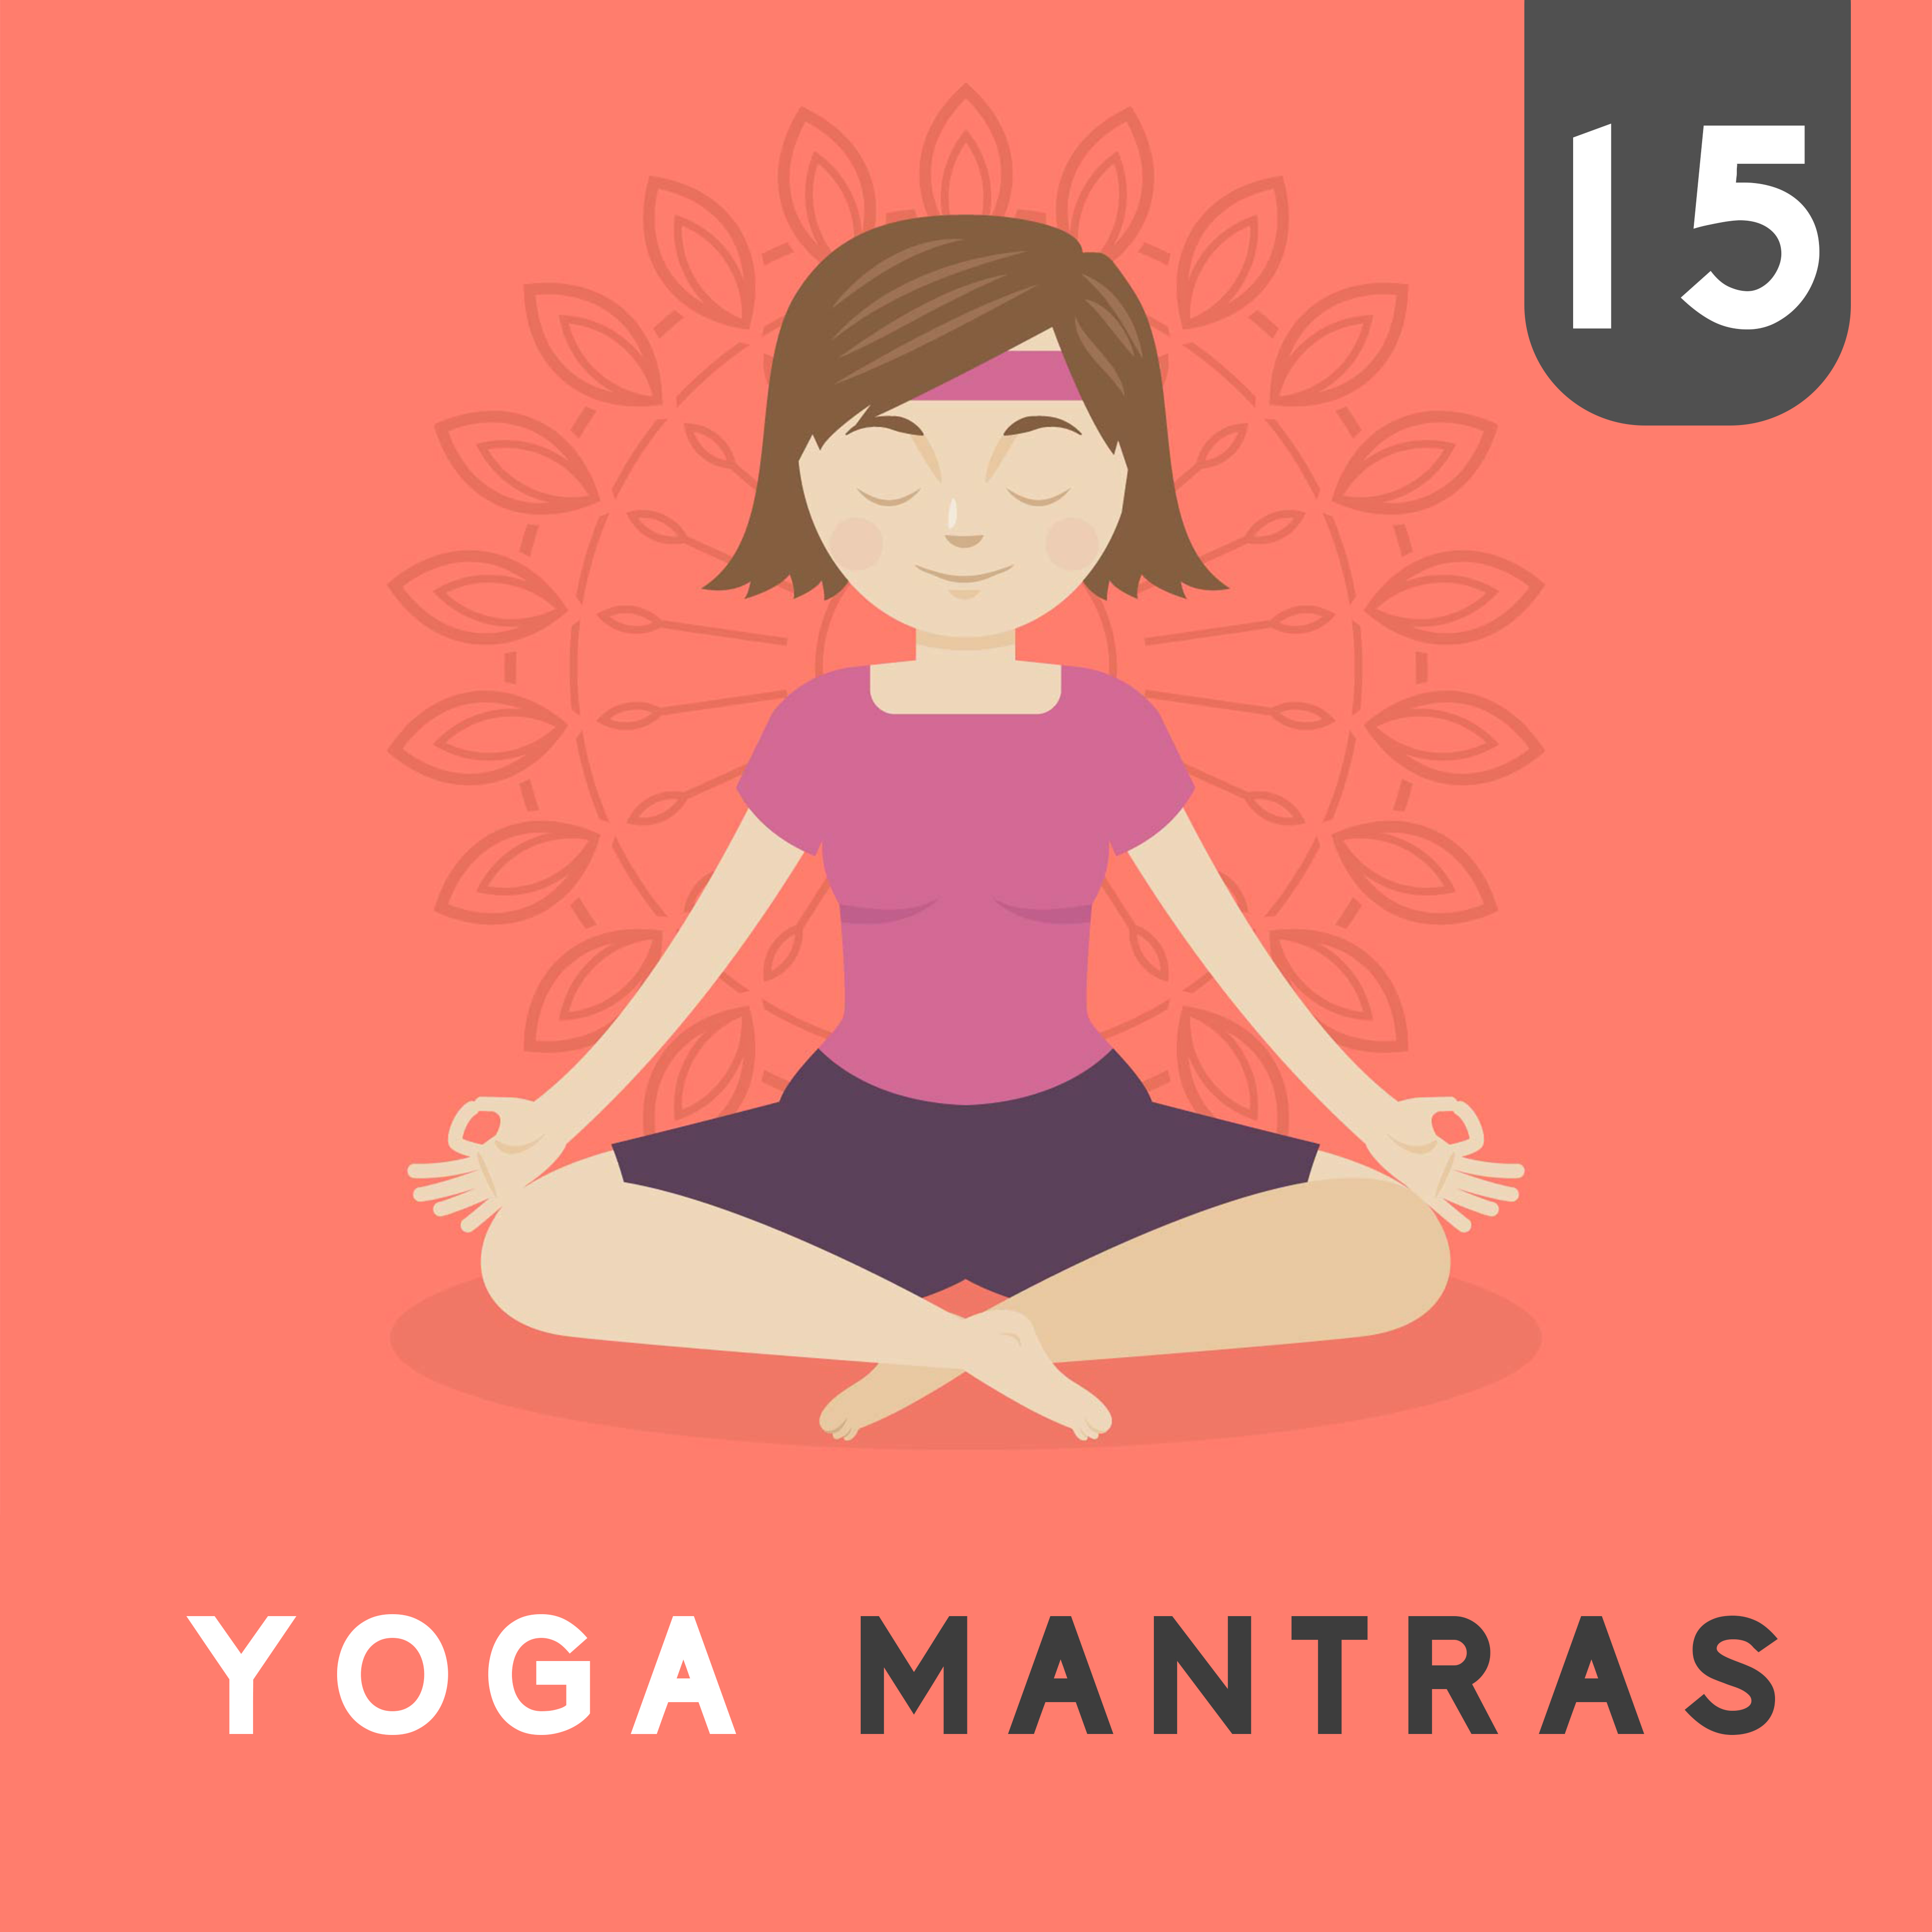 15 Yoga Mantras